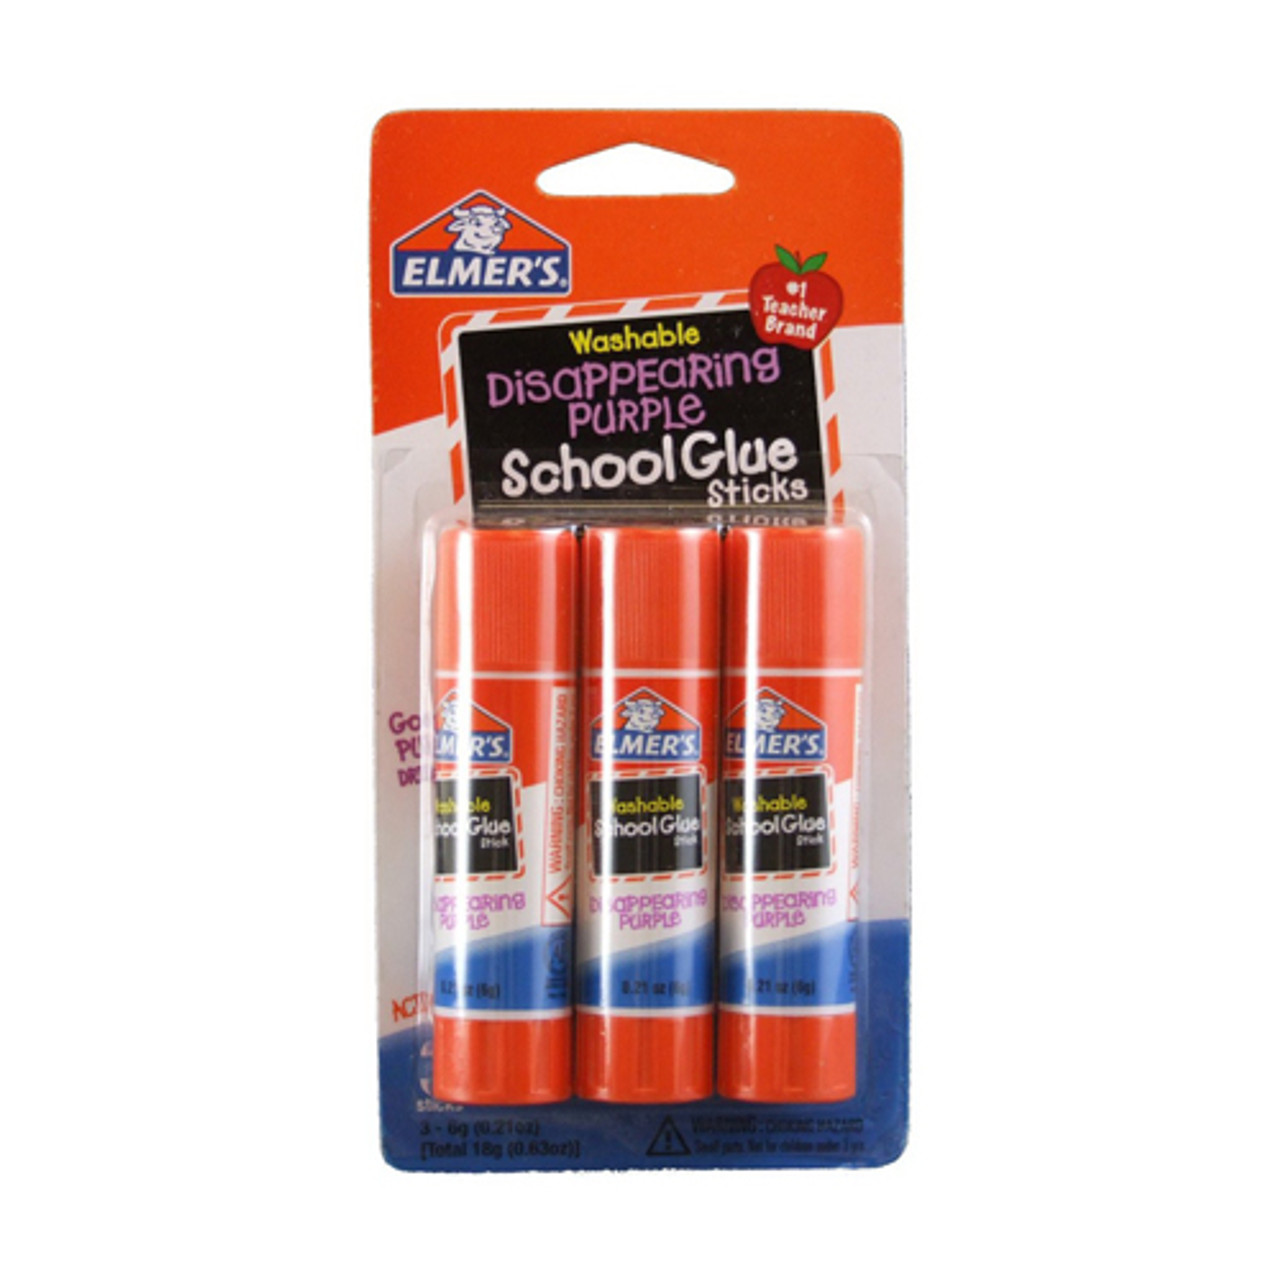 Elmer's Disappearing Purple Washable School Glue Sticks, 0.77 oz